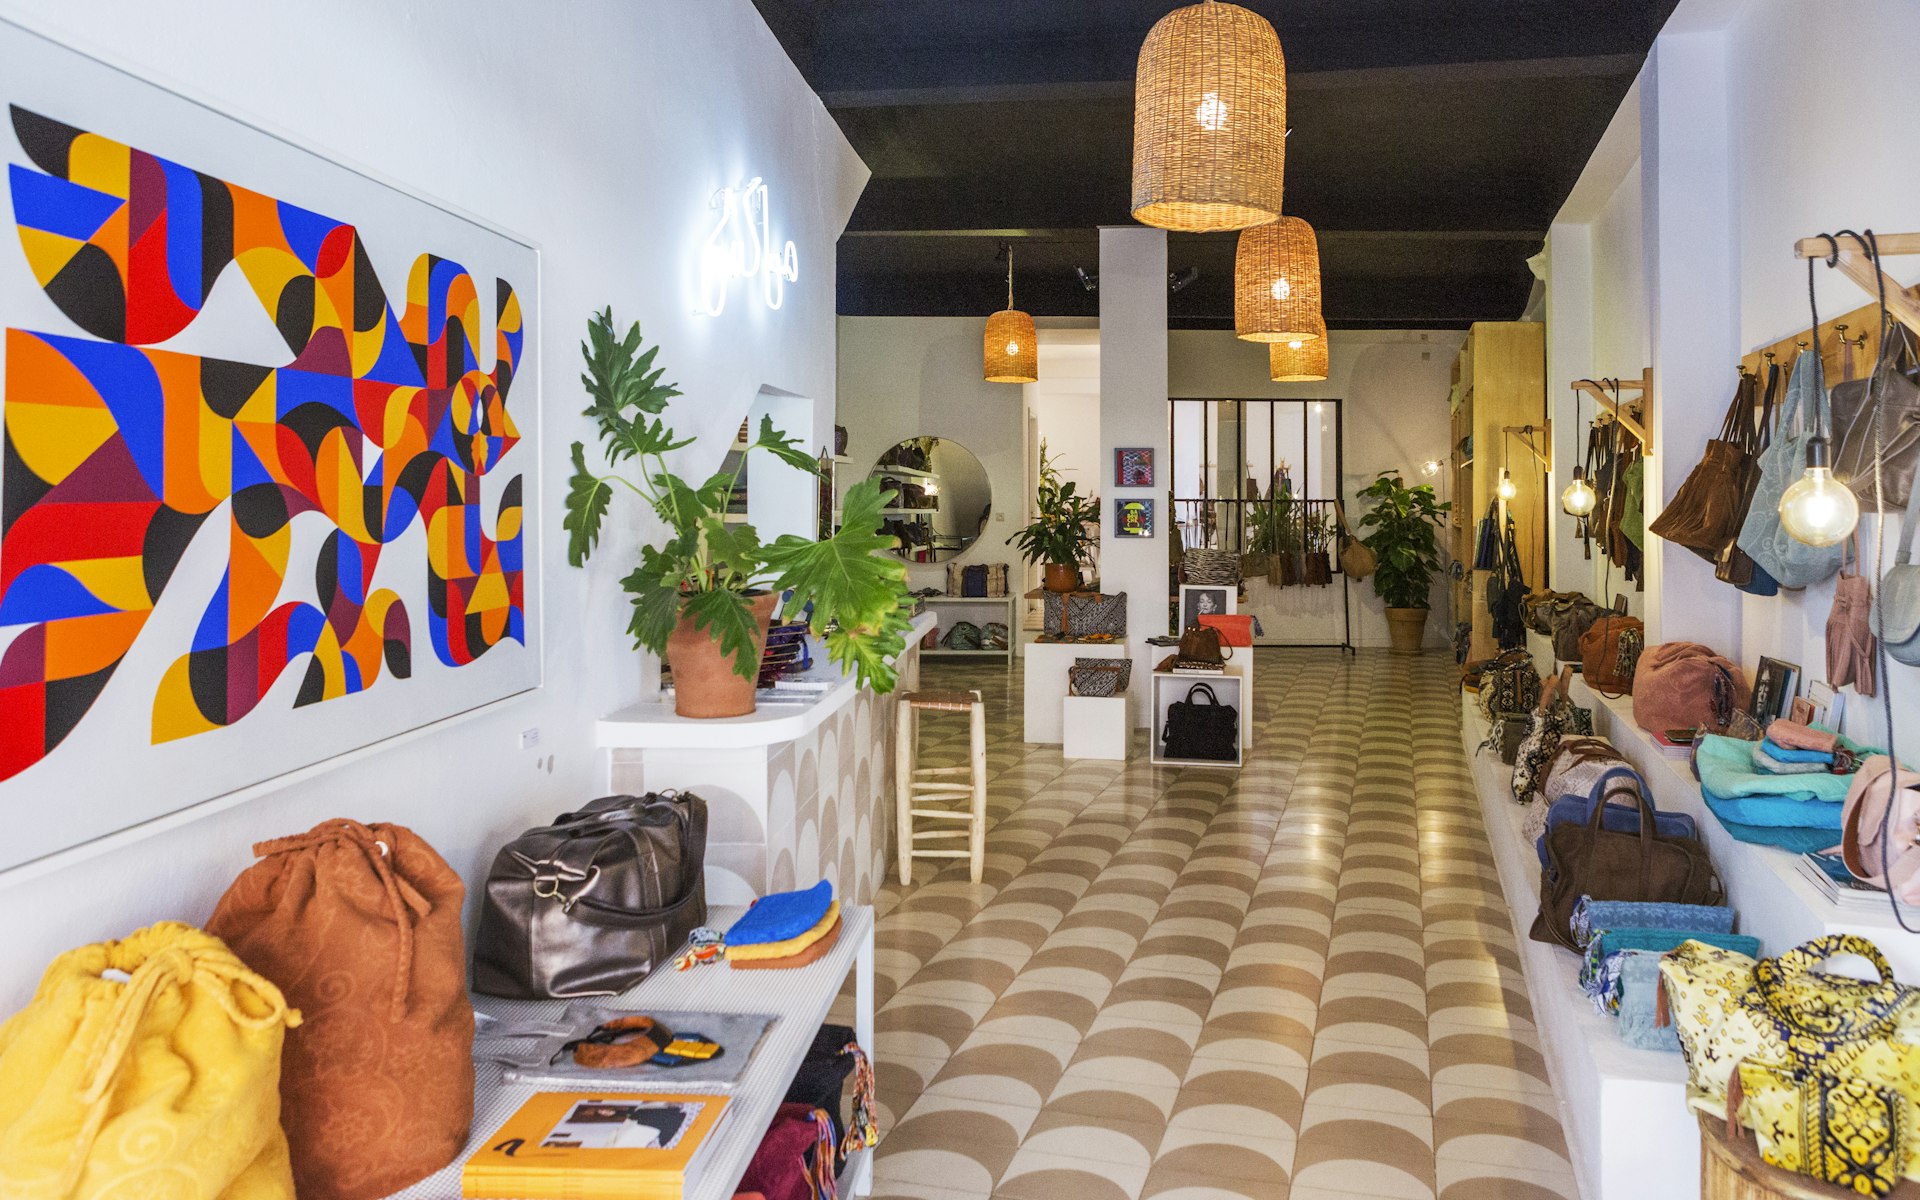 Lalla boutique interior with merchandise in Marrakesh